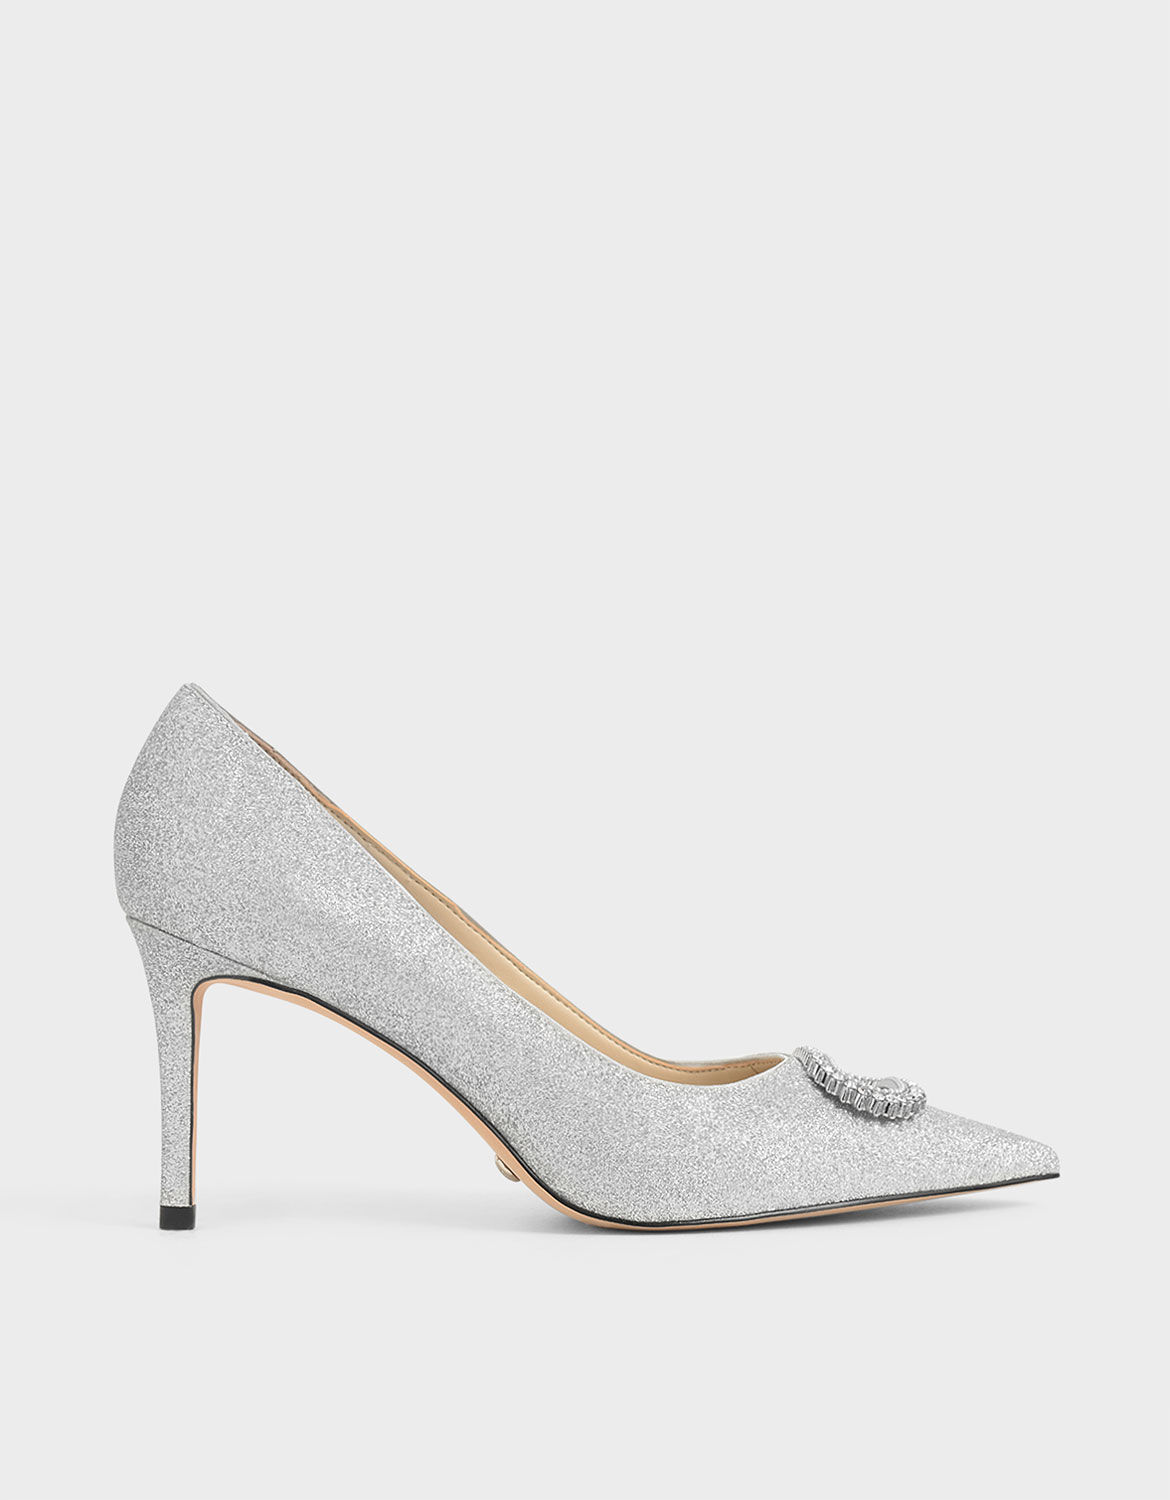 wedding shoes silver heels